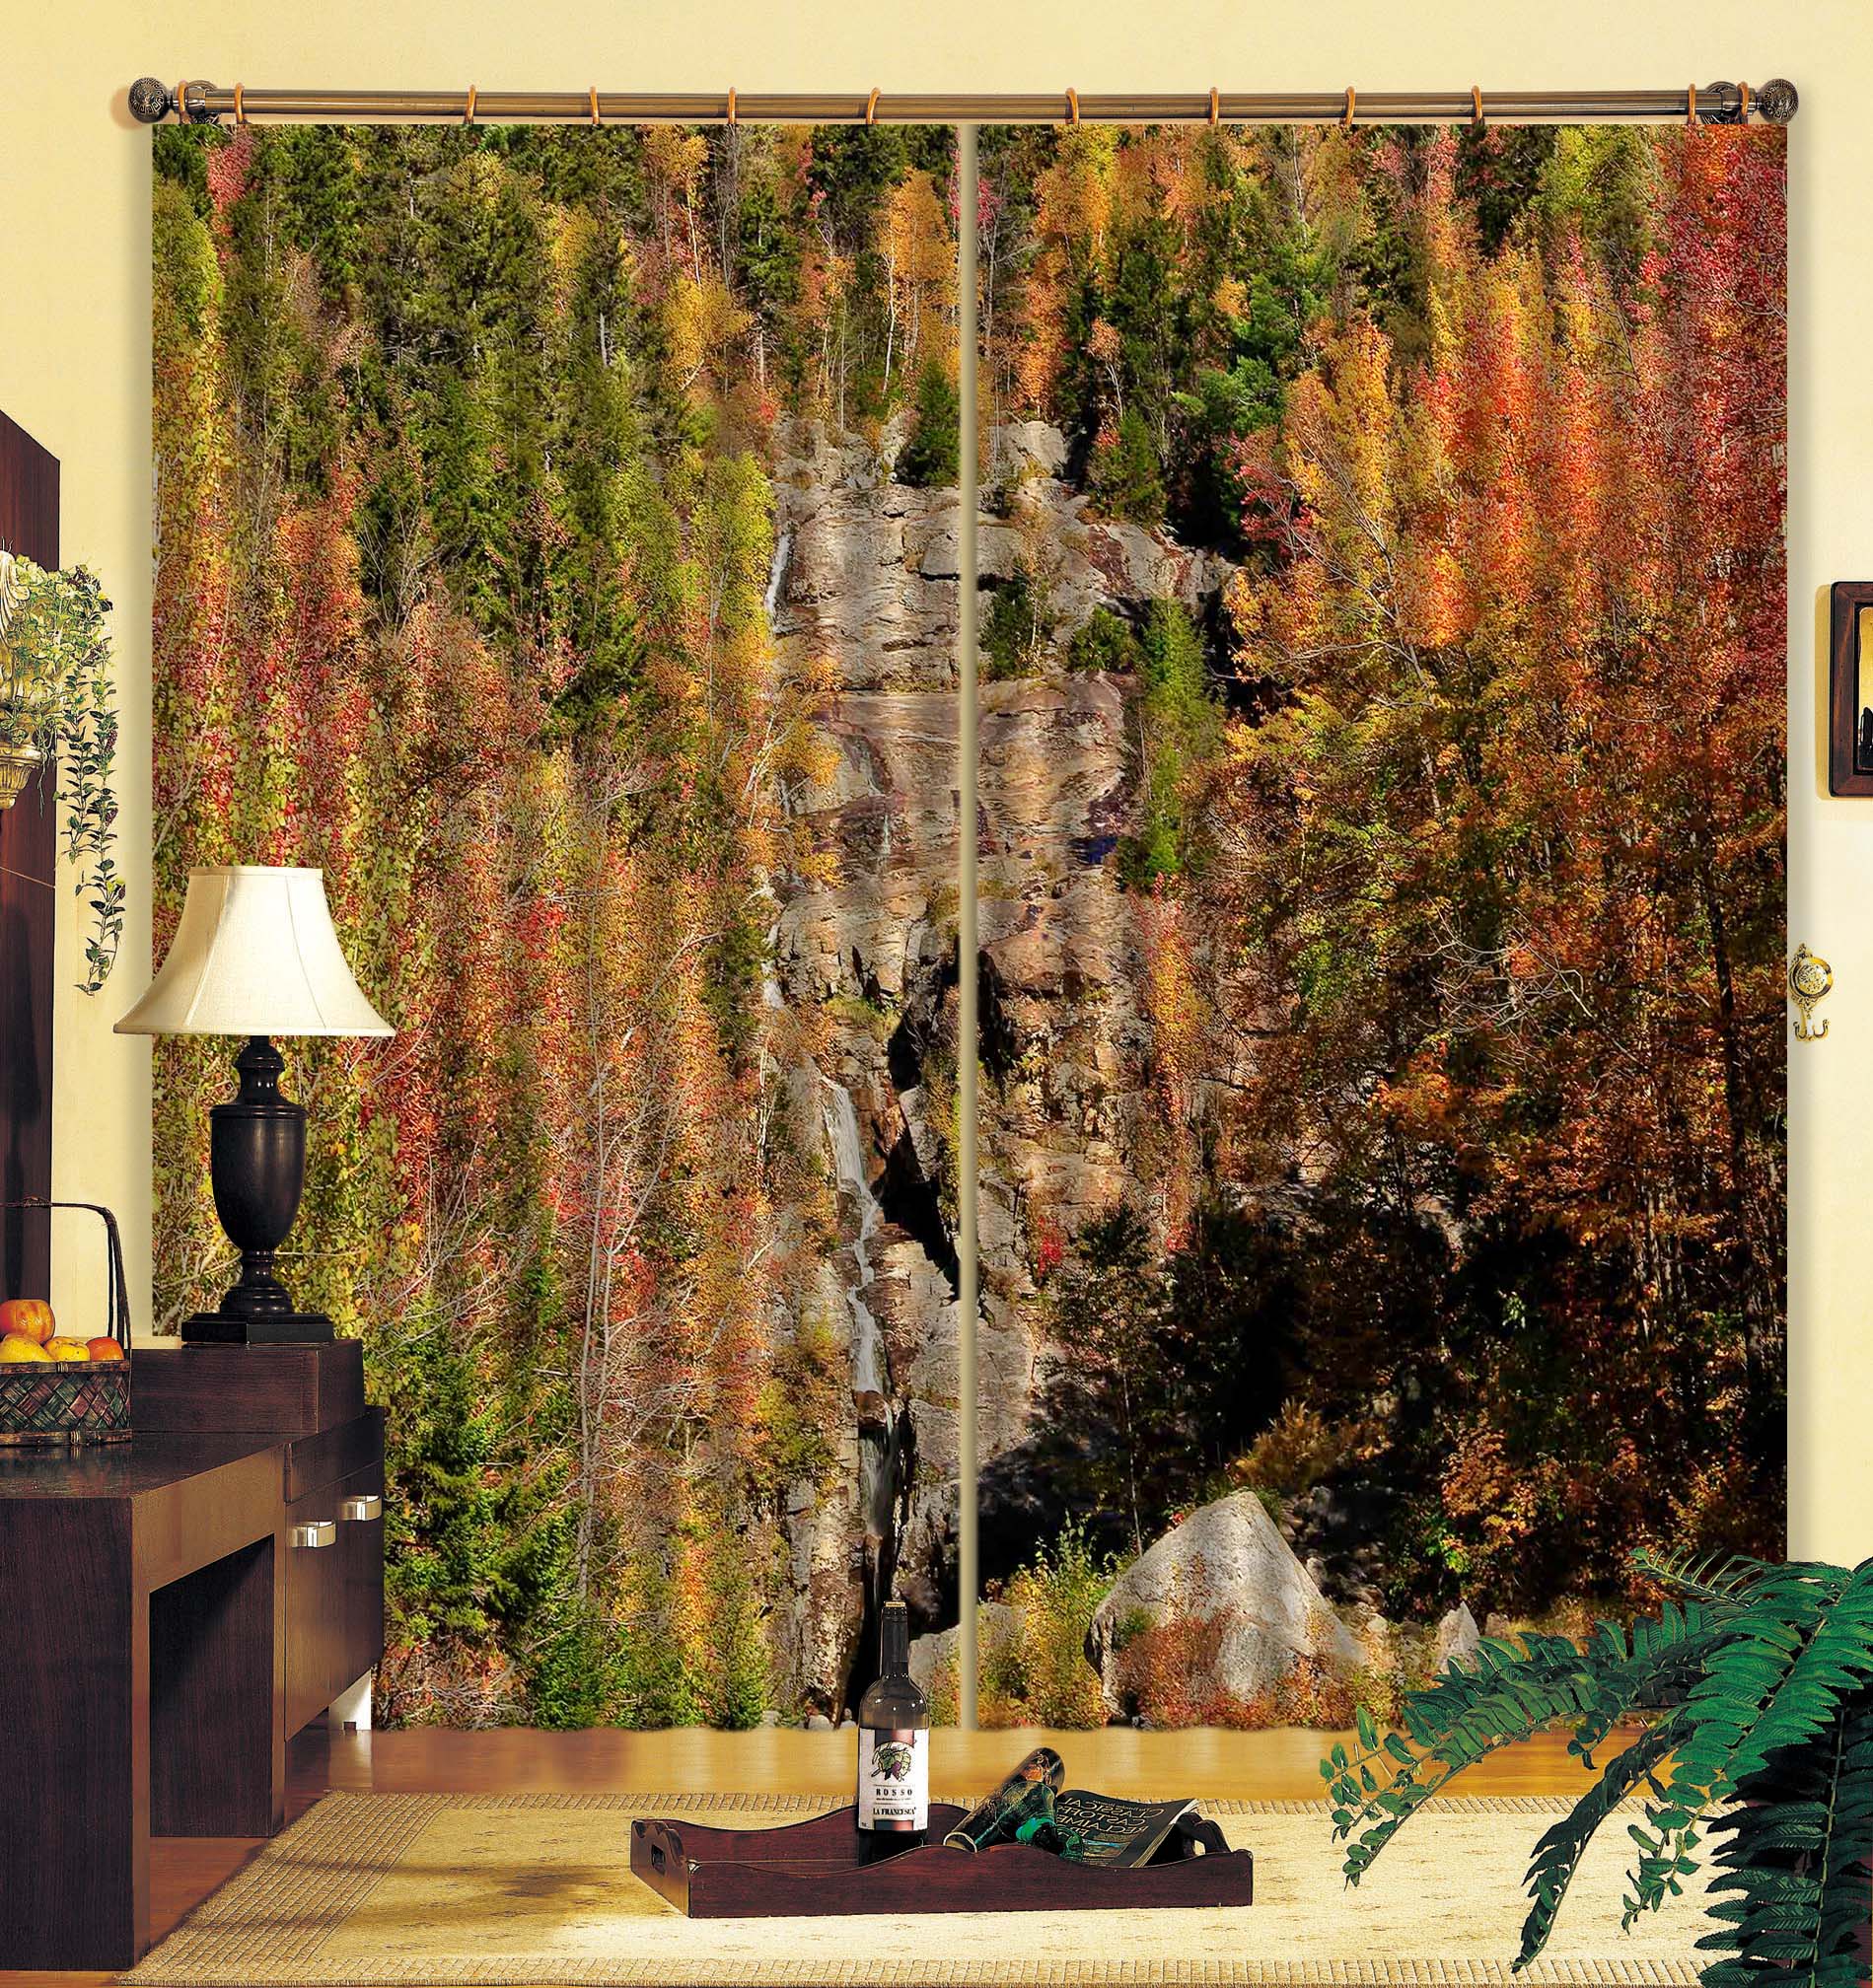 3D Roadside Falls 61236 Kathy Barefield Curtain Curtains Drapes